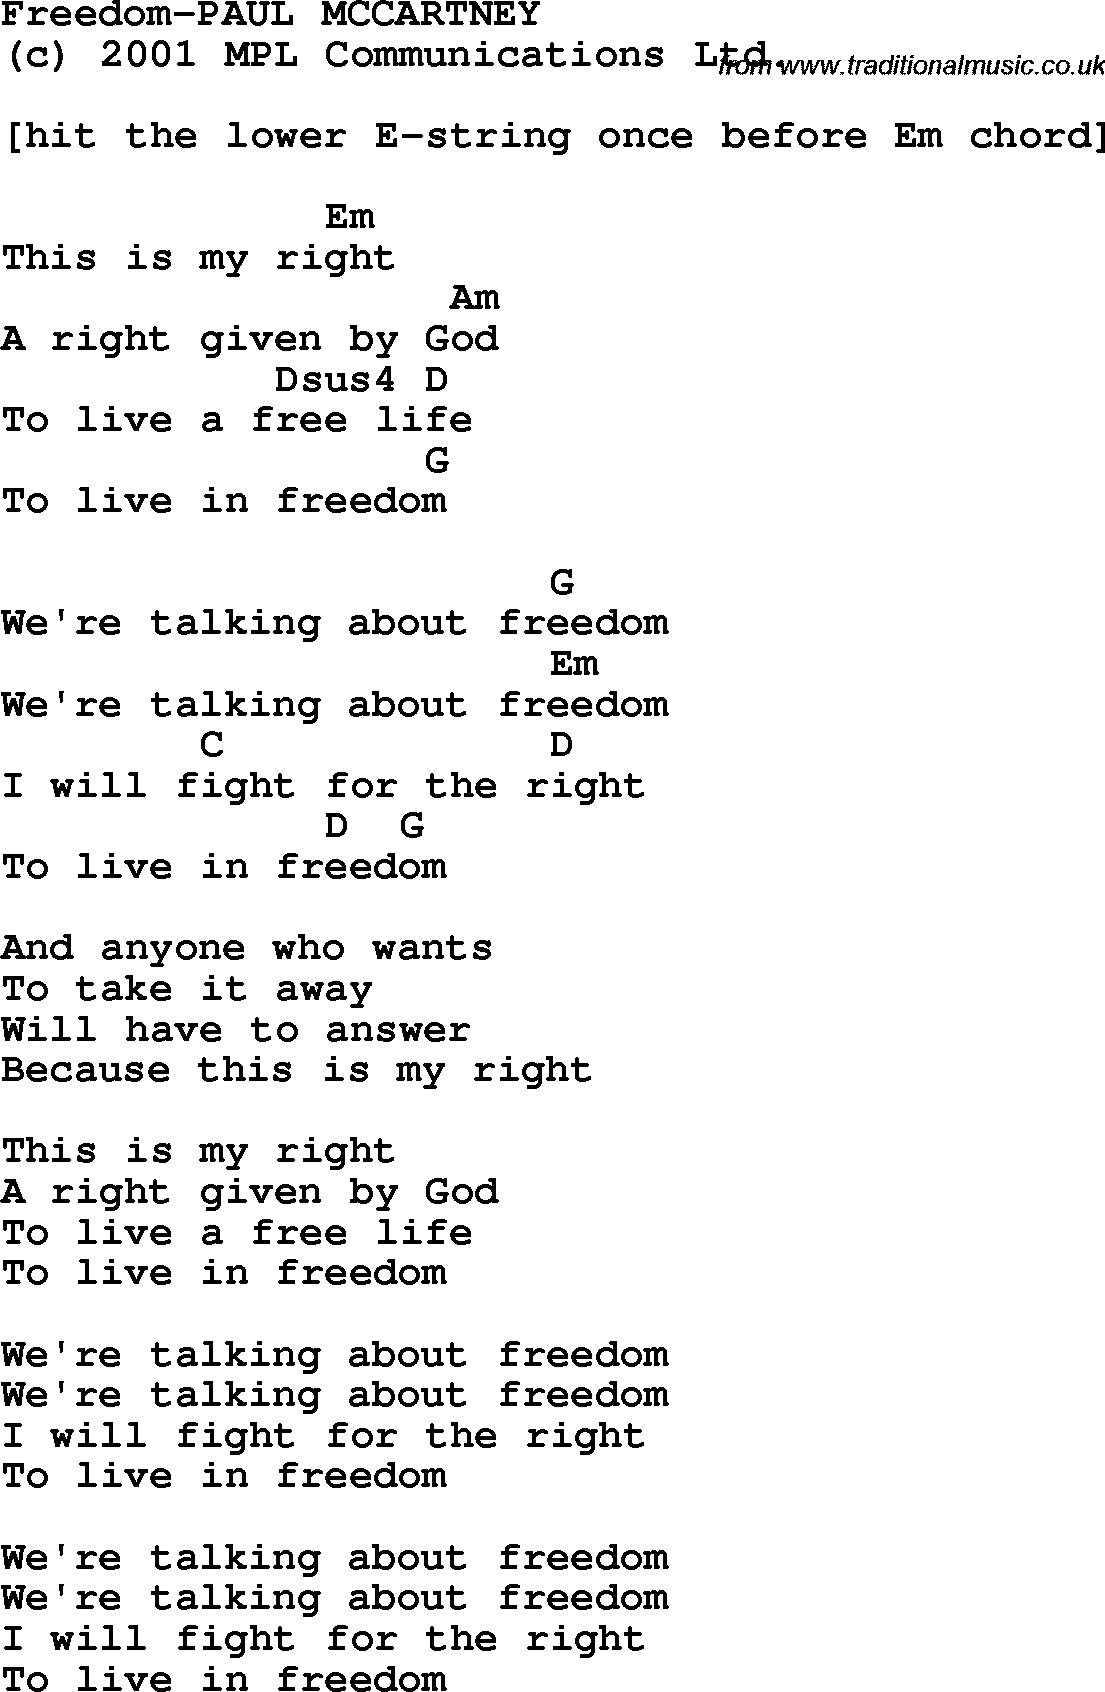 Protest Song Freedom-Paul McCartney lyrics and chords